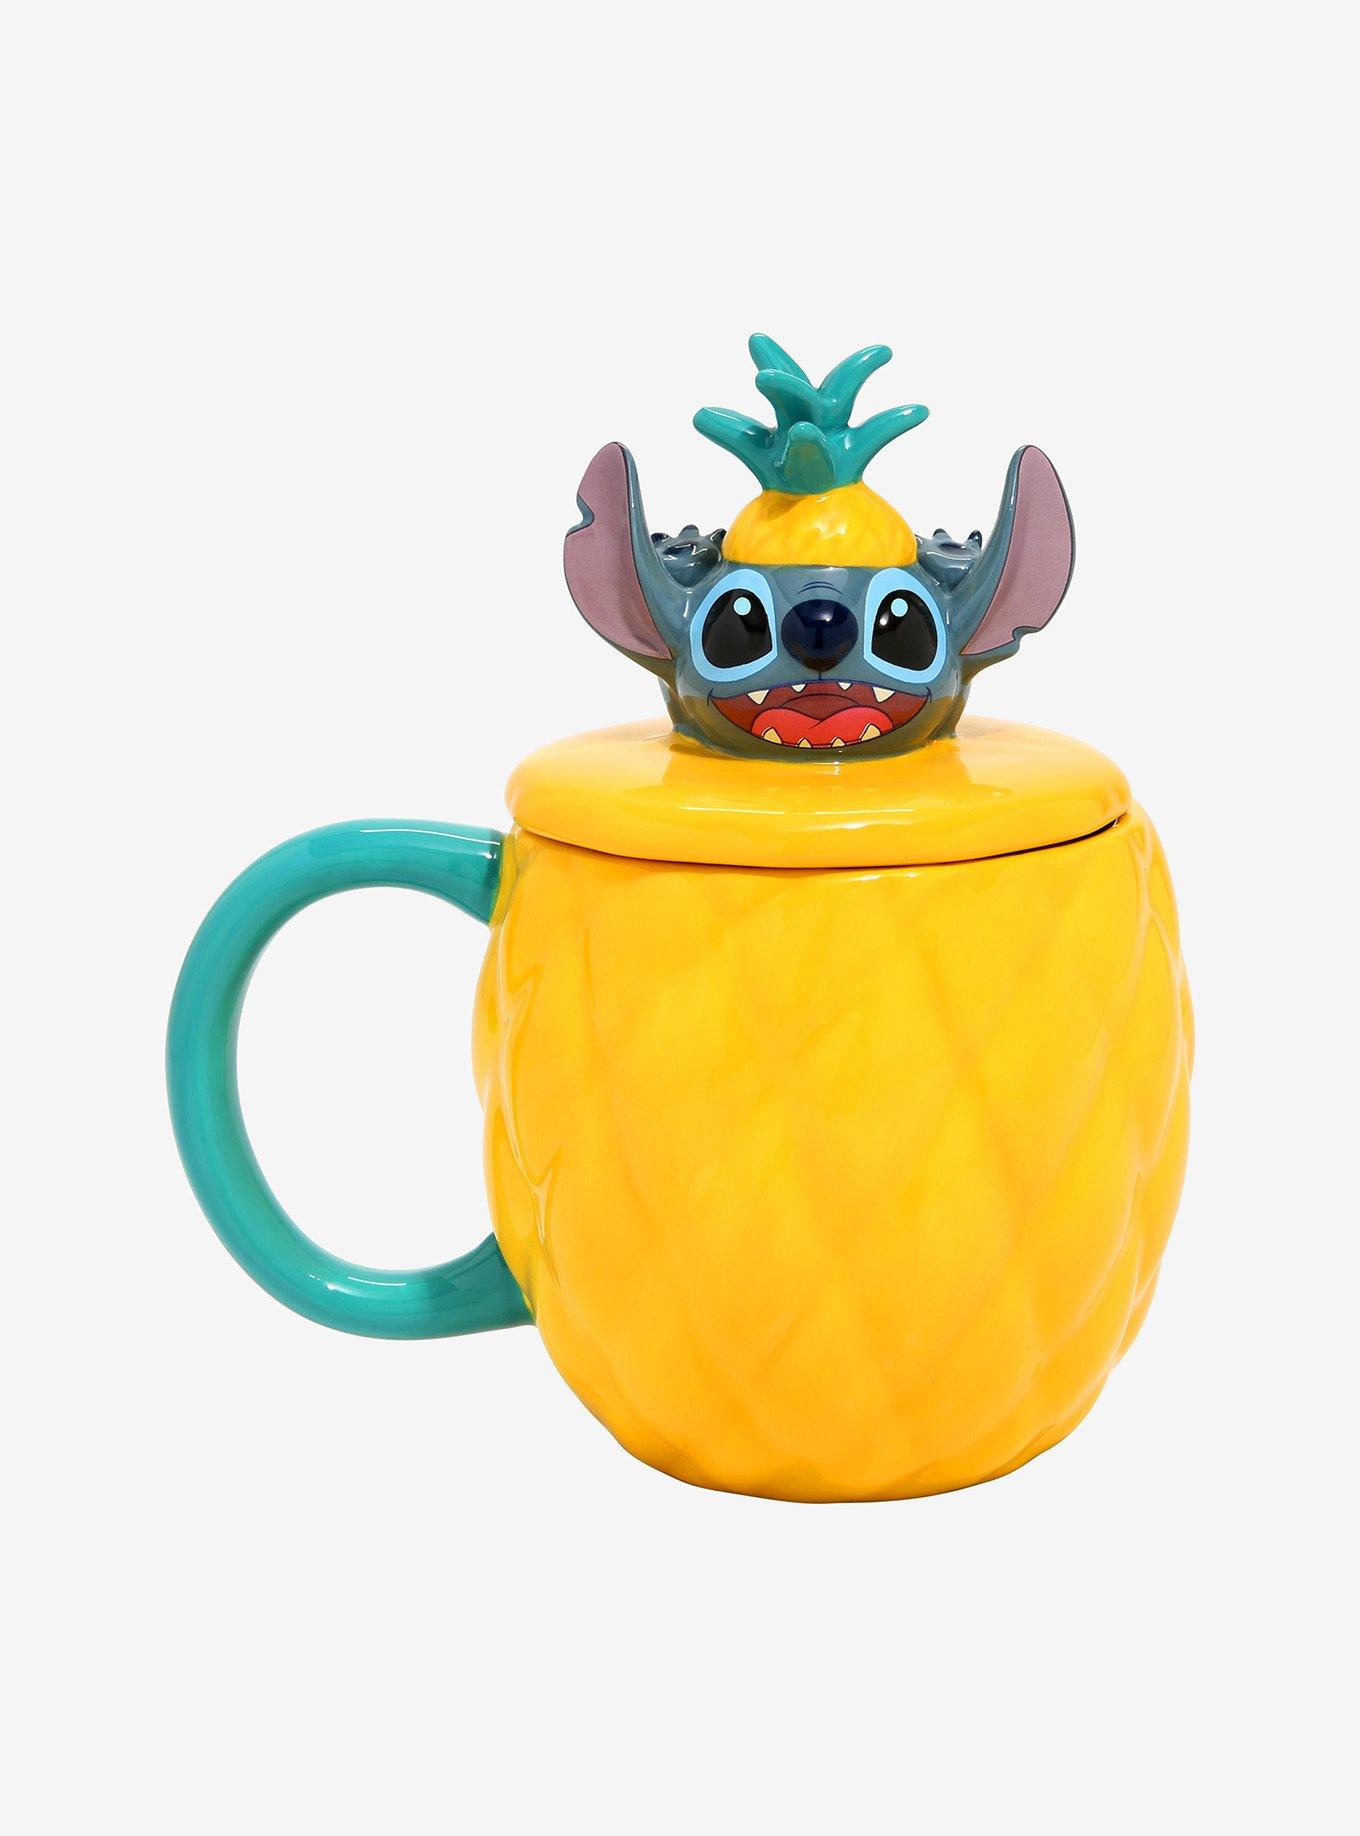 Disney Stitch Mug